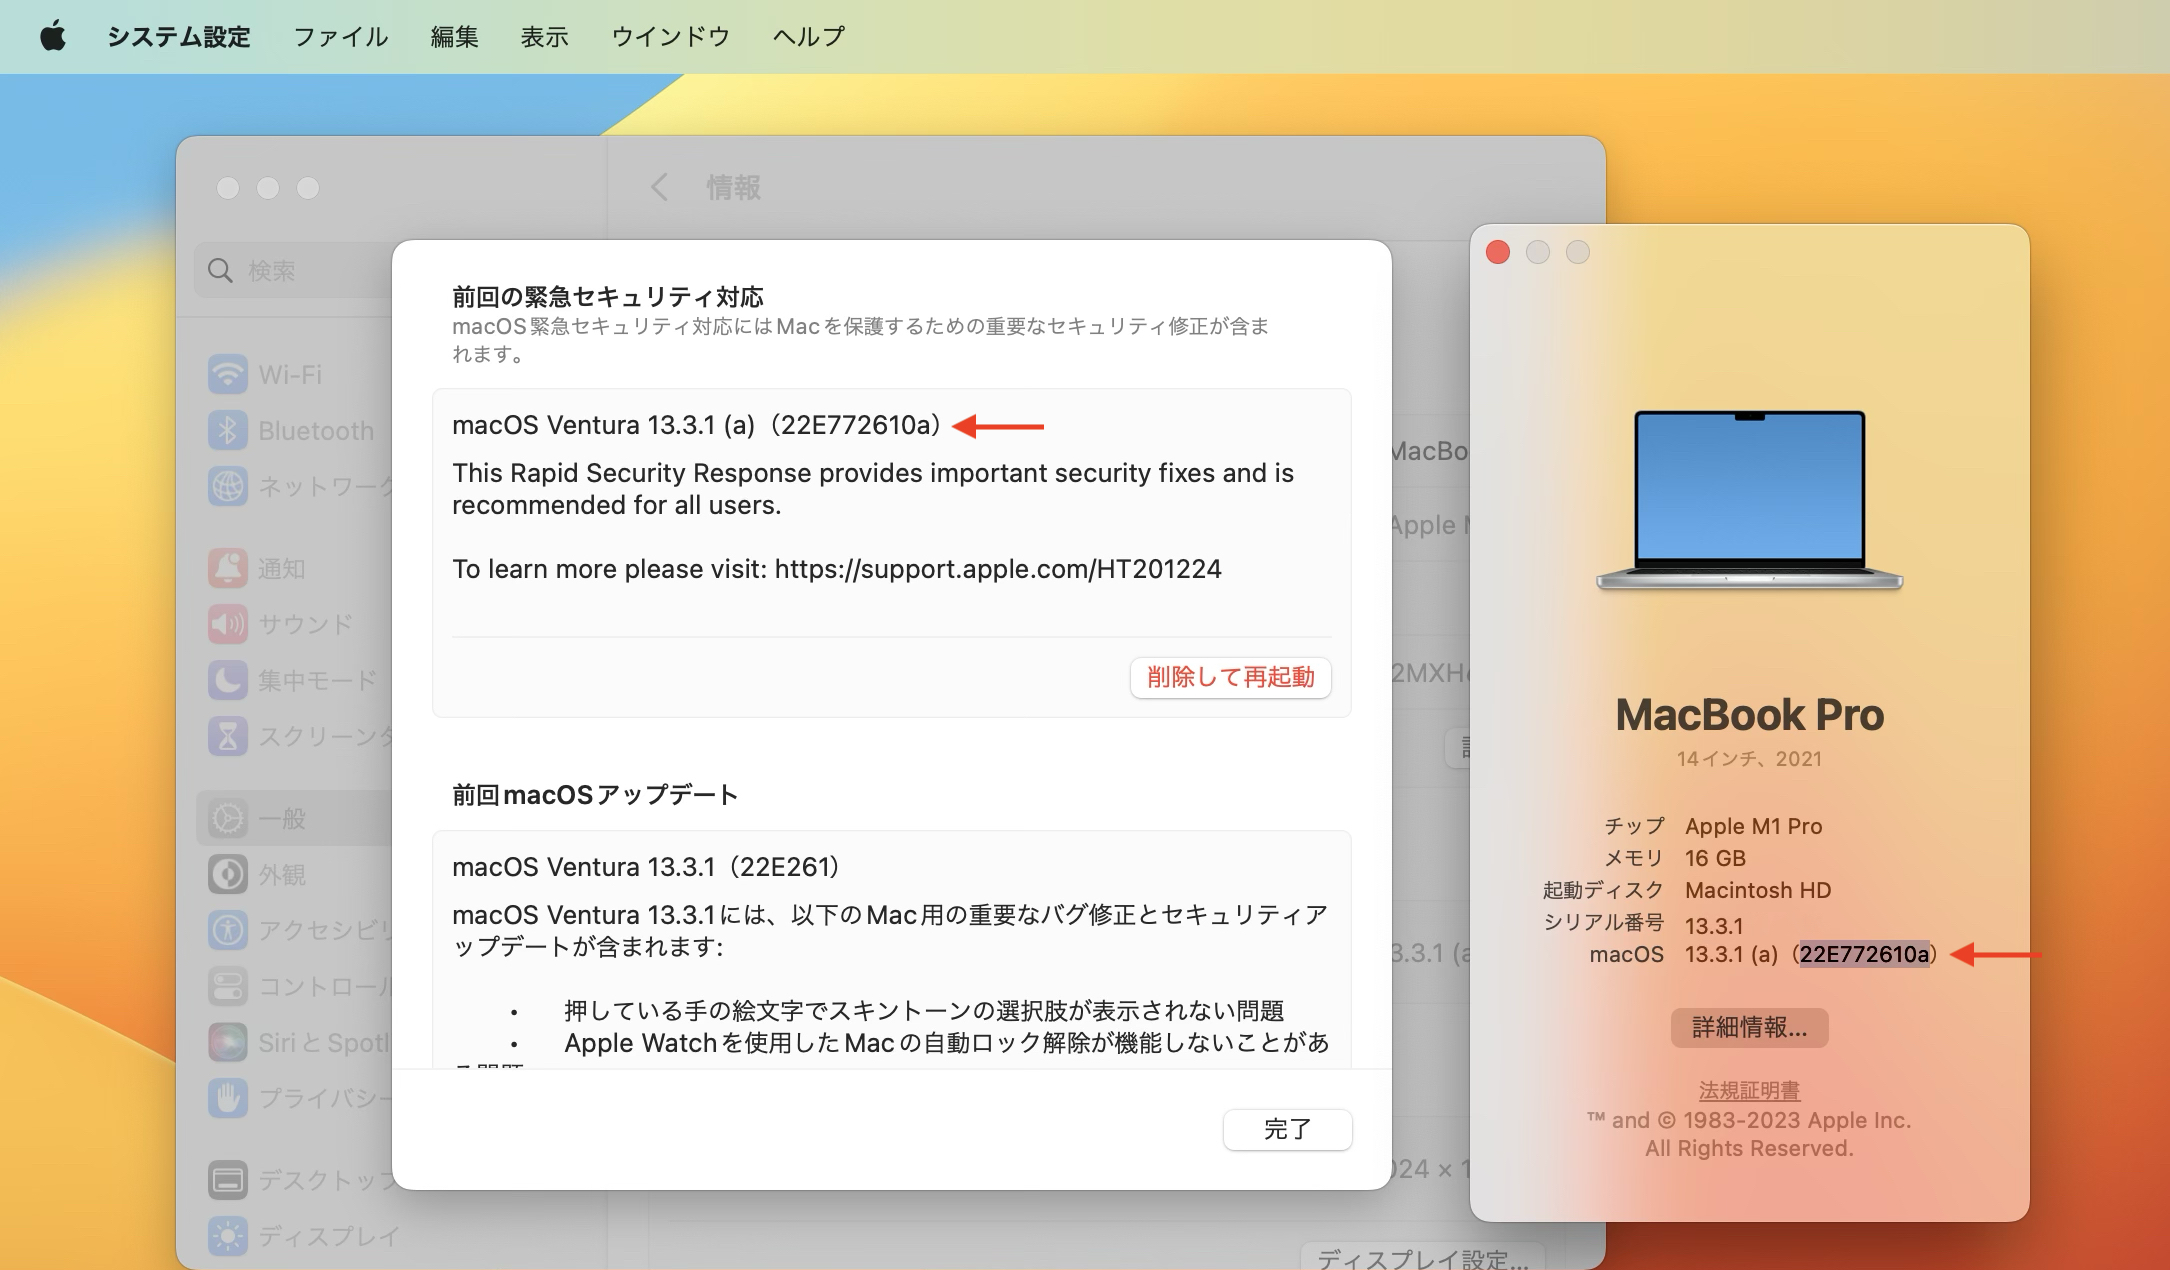 macOS Security Response 13.3.1 (a) Ventura